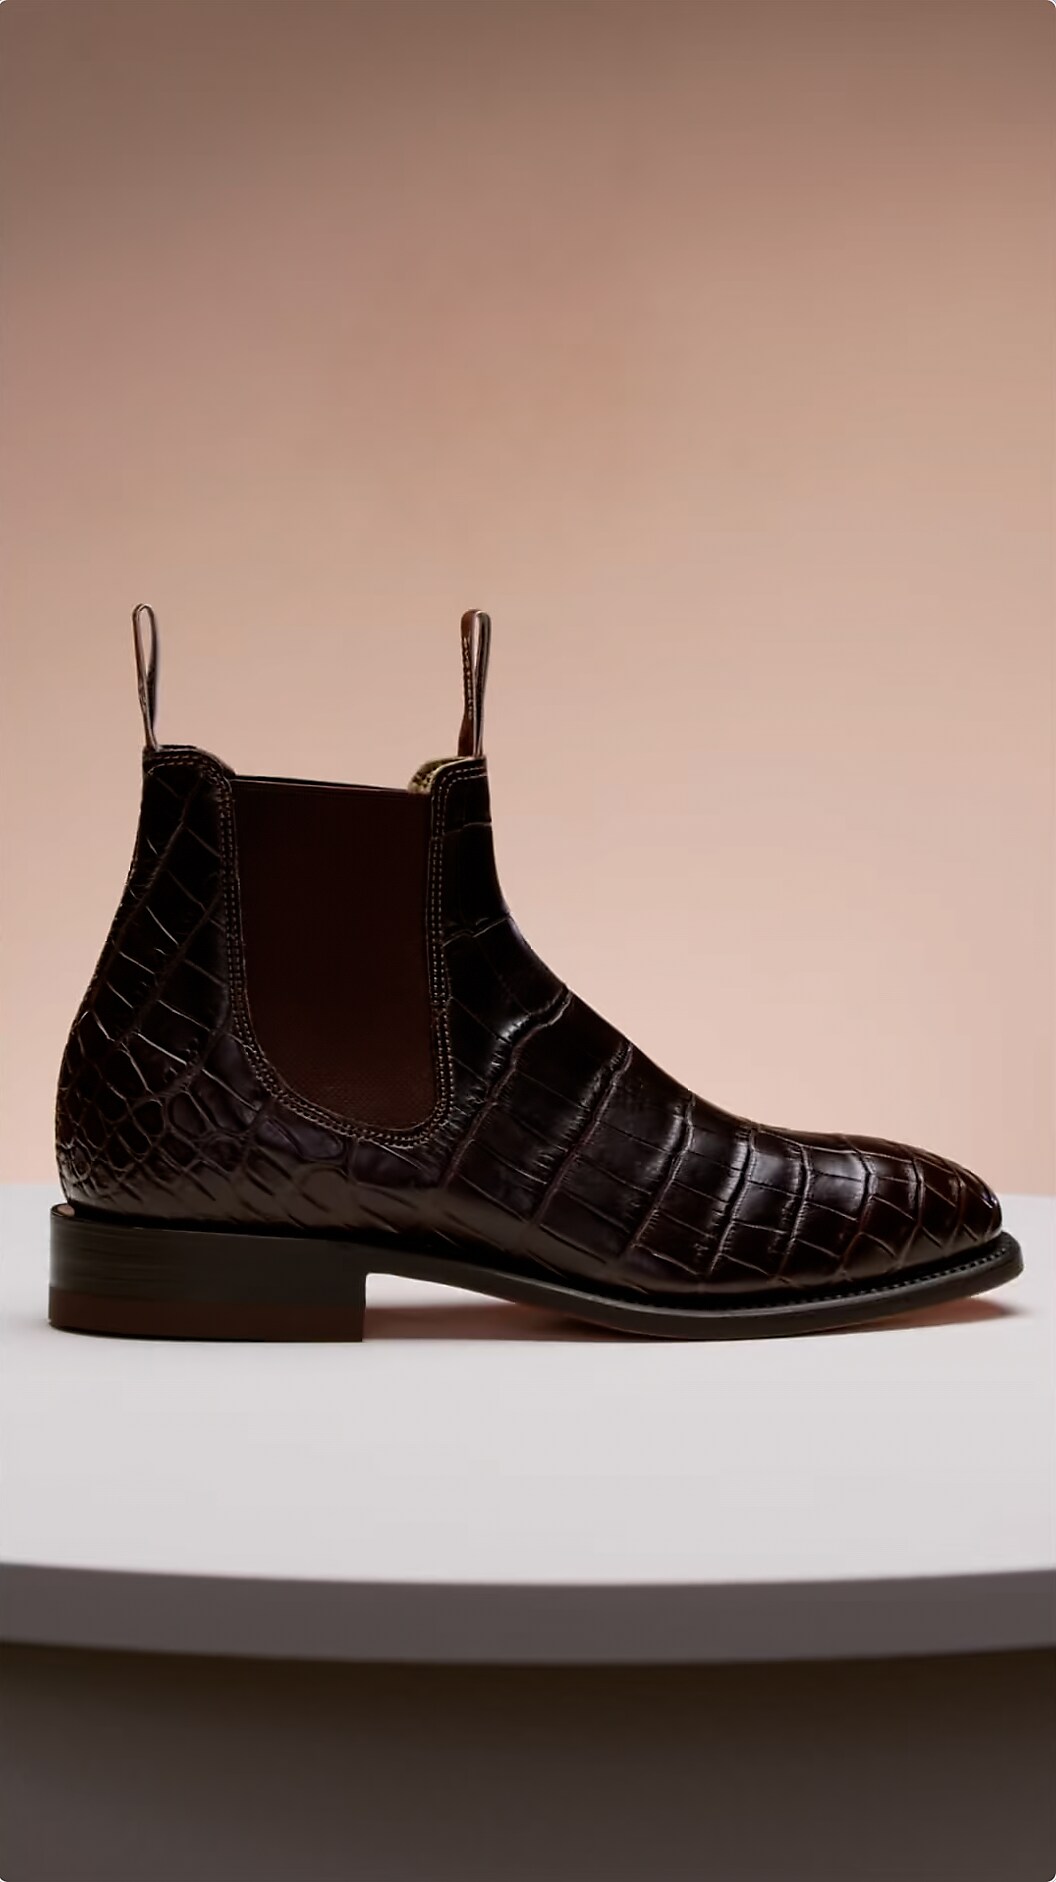 R.M. Williams, Shoes, Rmwilliams Crocodile Boots